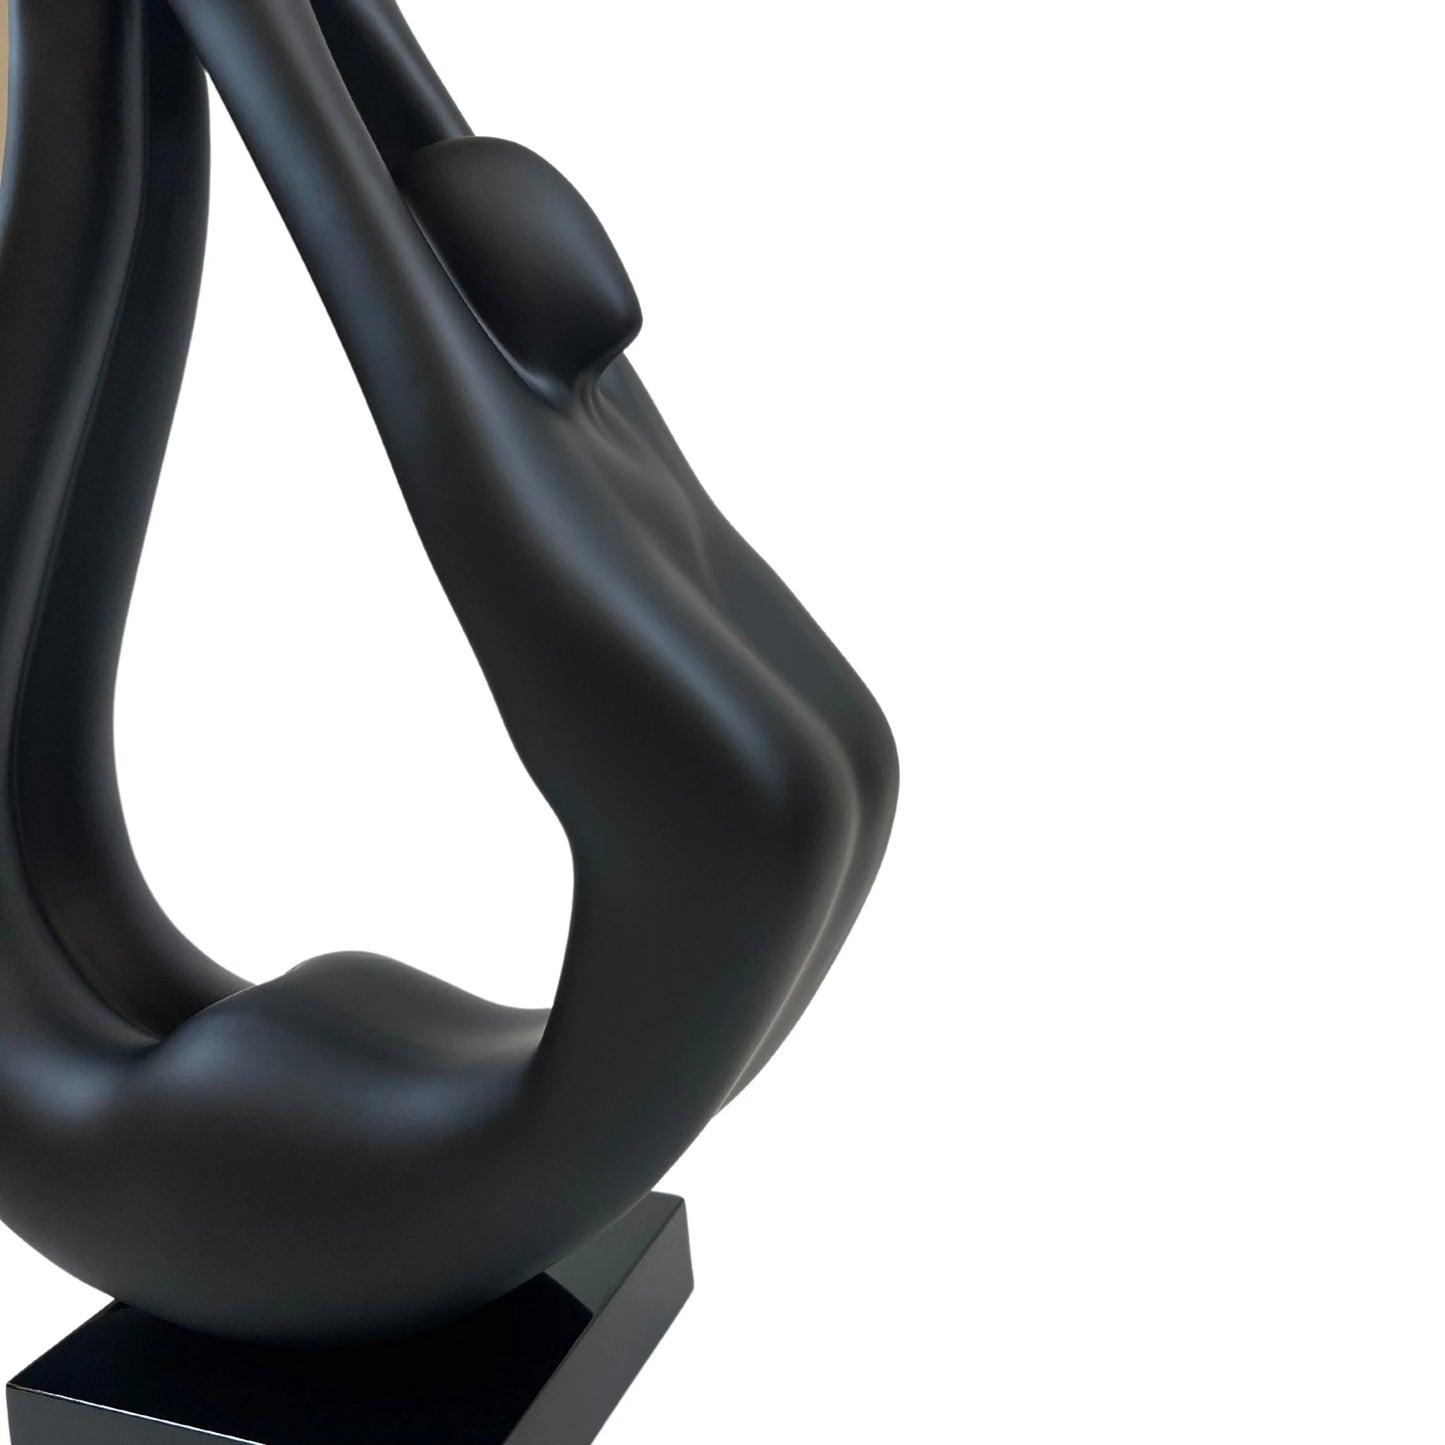 Finesse Decor Yoga Black Sculpture in Black Base 6